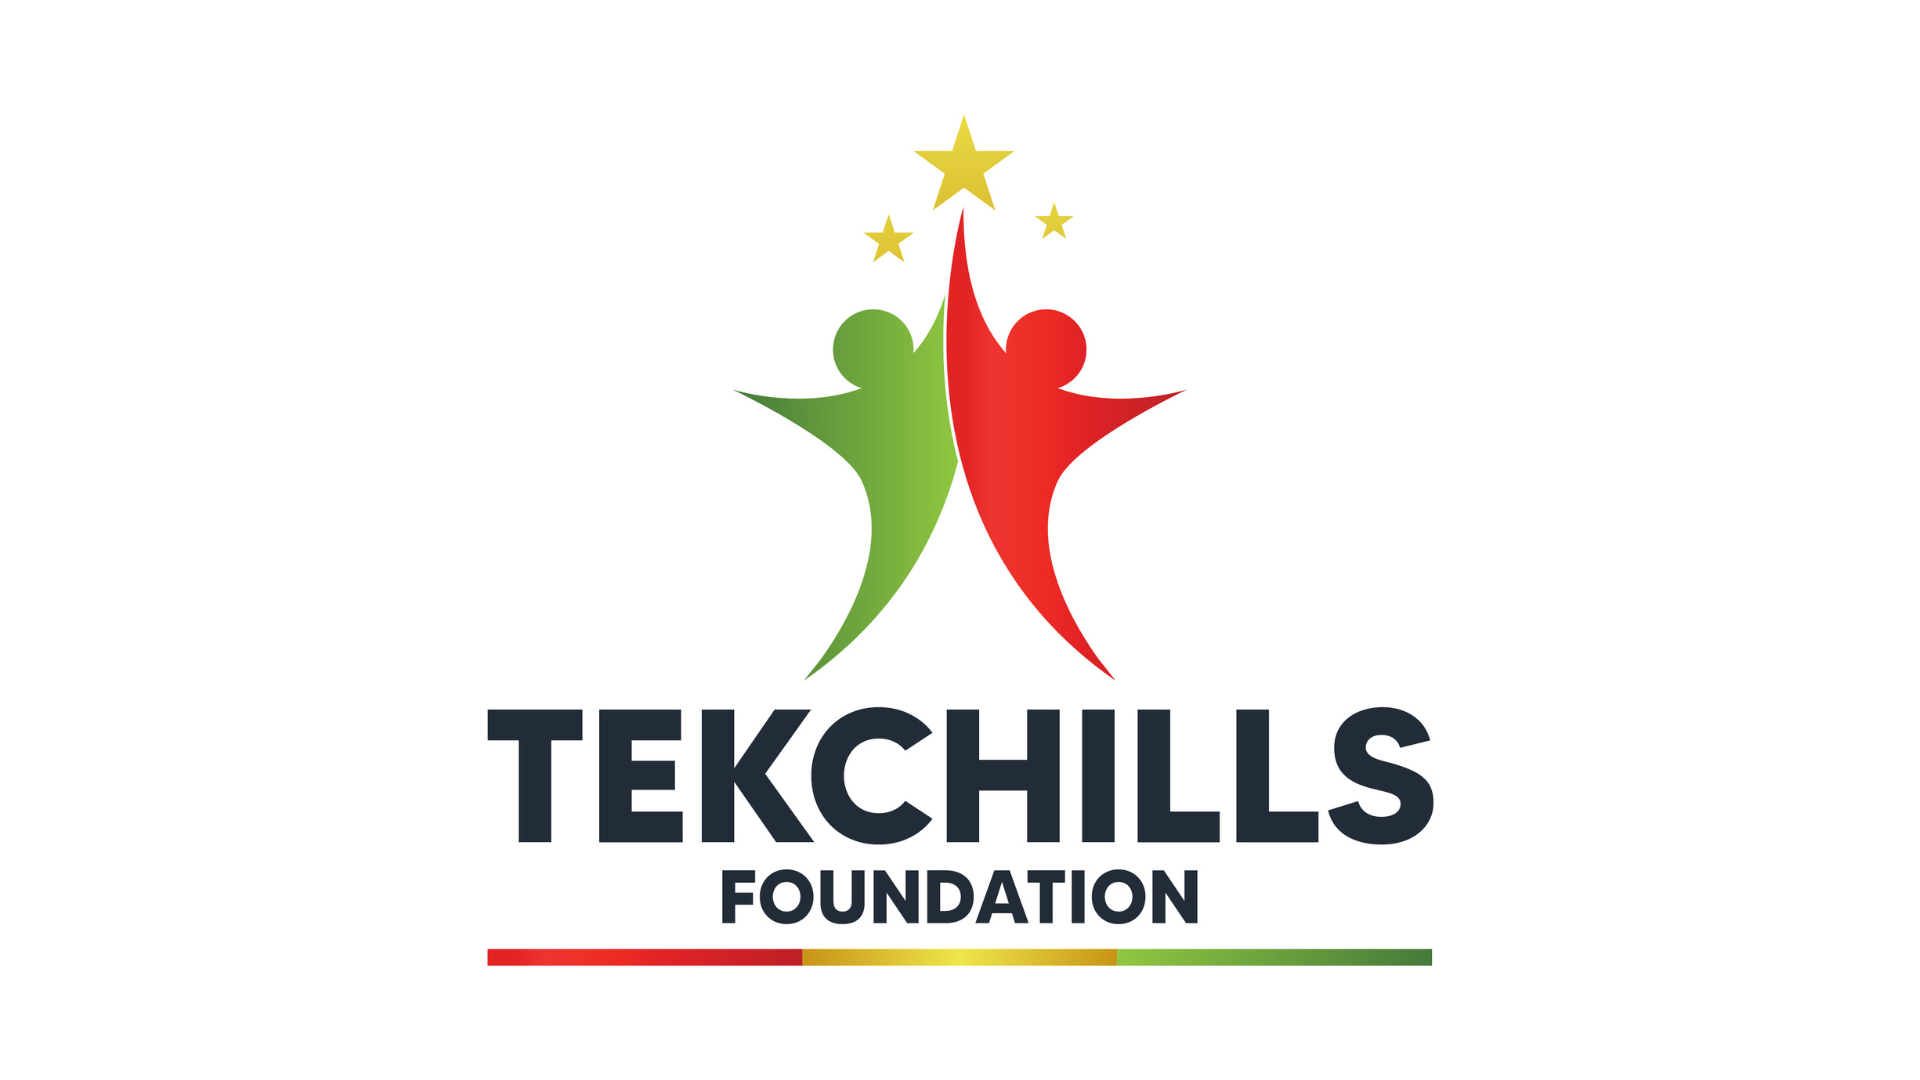 TEKCHILLS Foundation logo